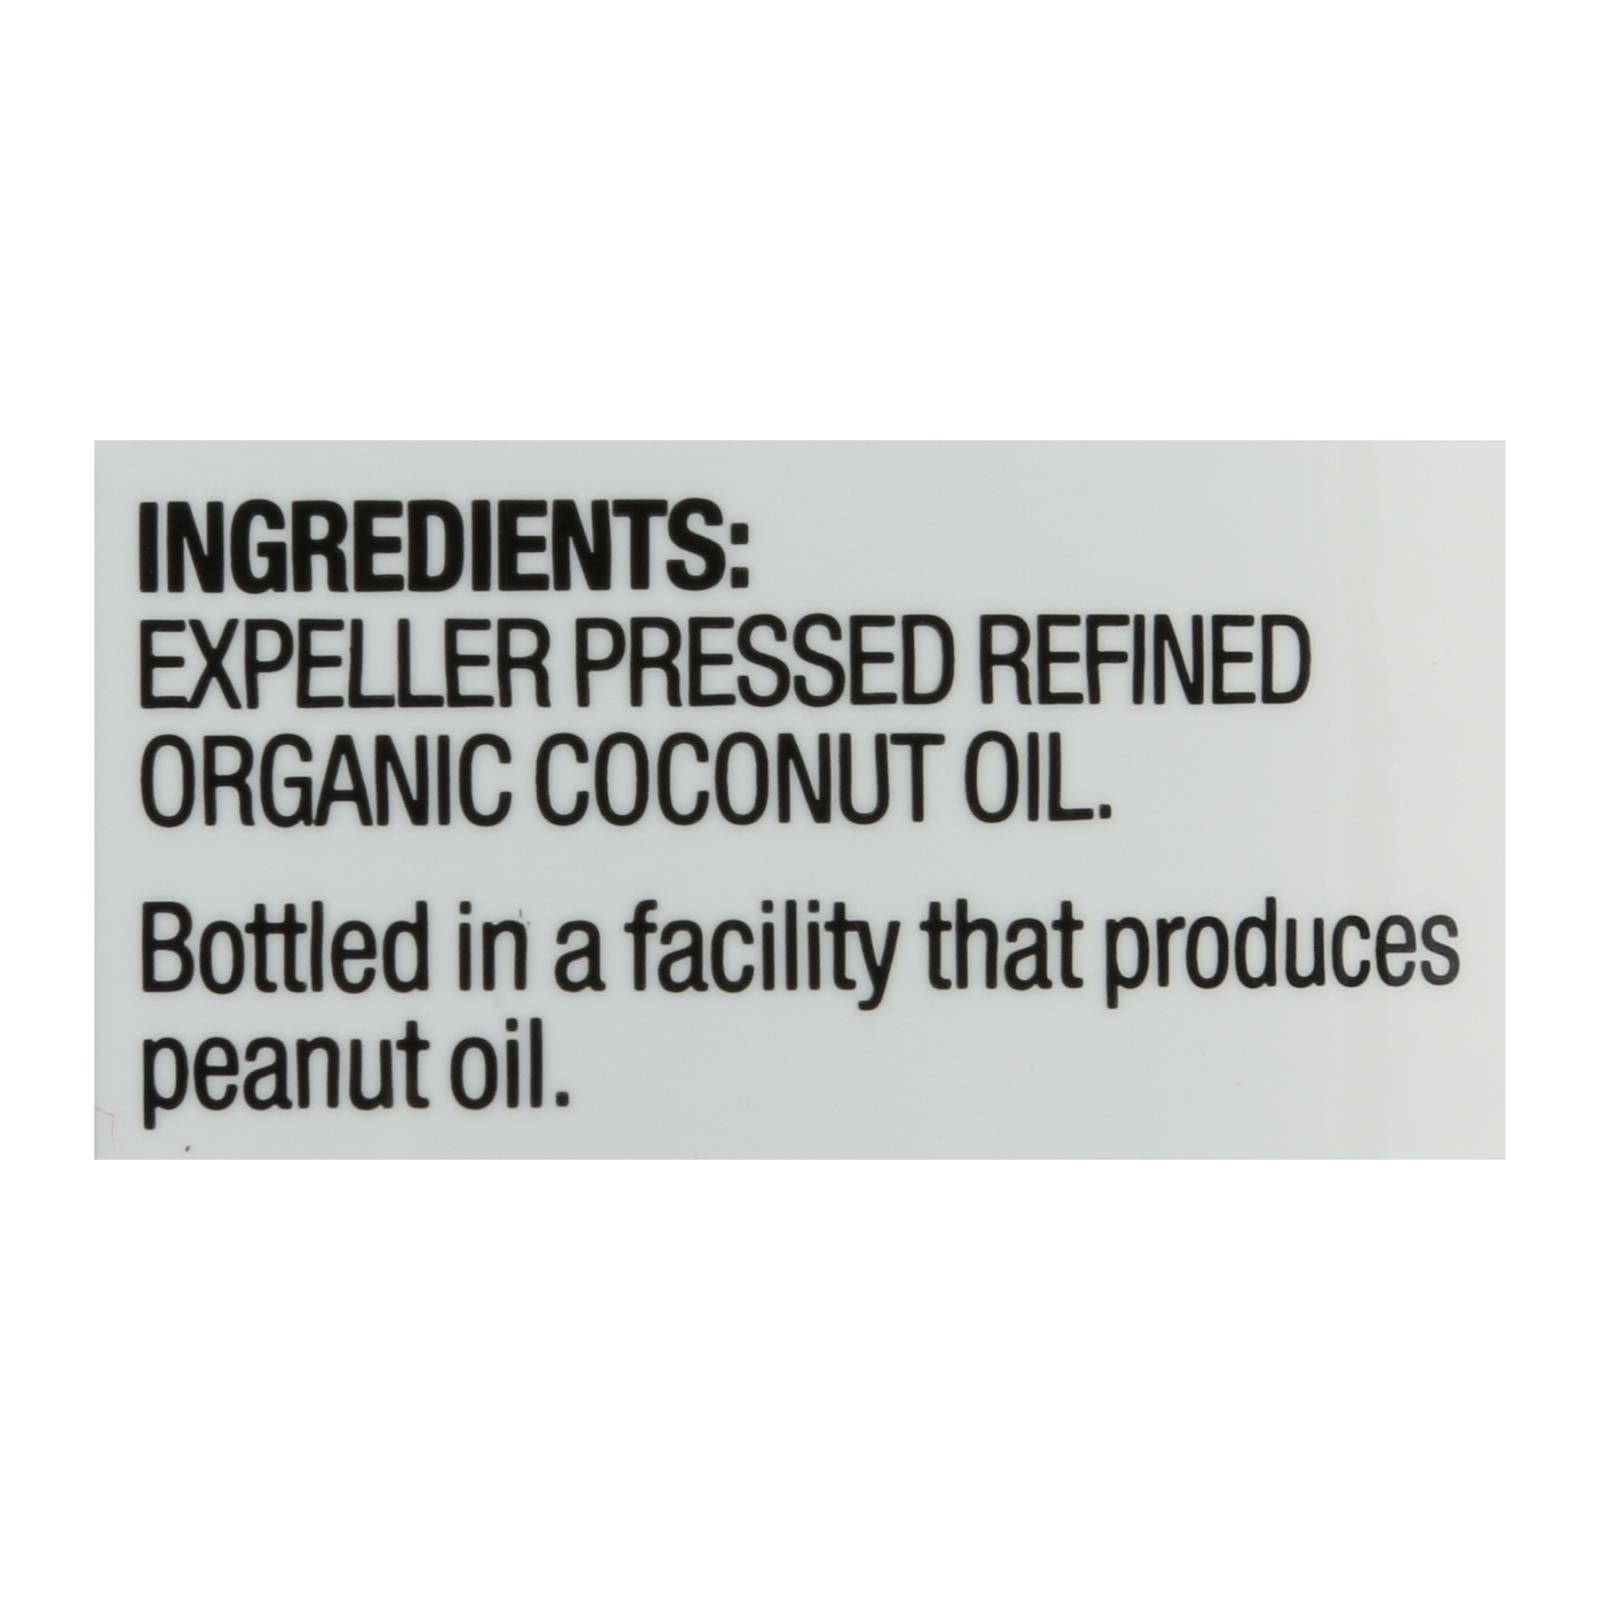 Spectrum Naturals Organic Refined Coconut Oil - Case Of 12 - 14 Fl Oz.